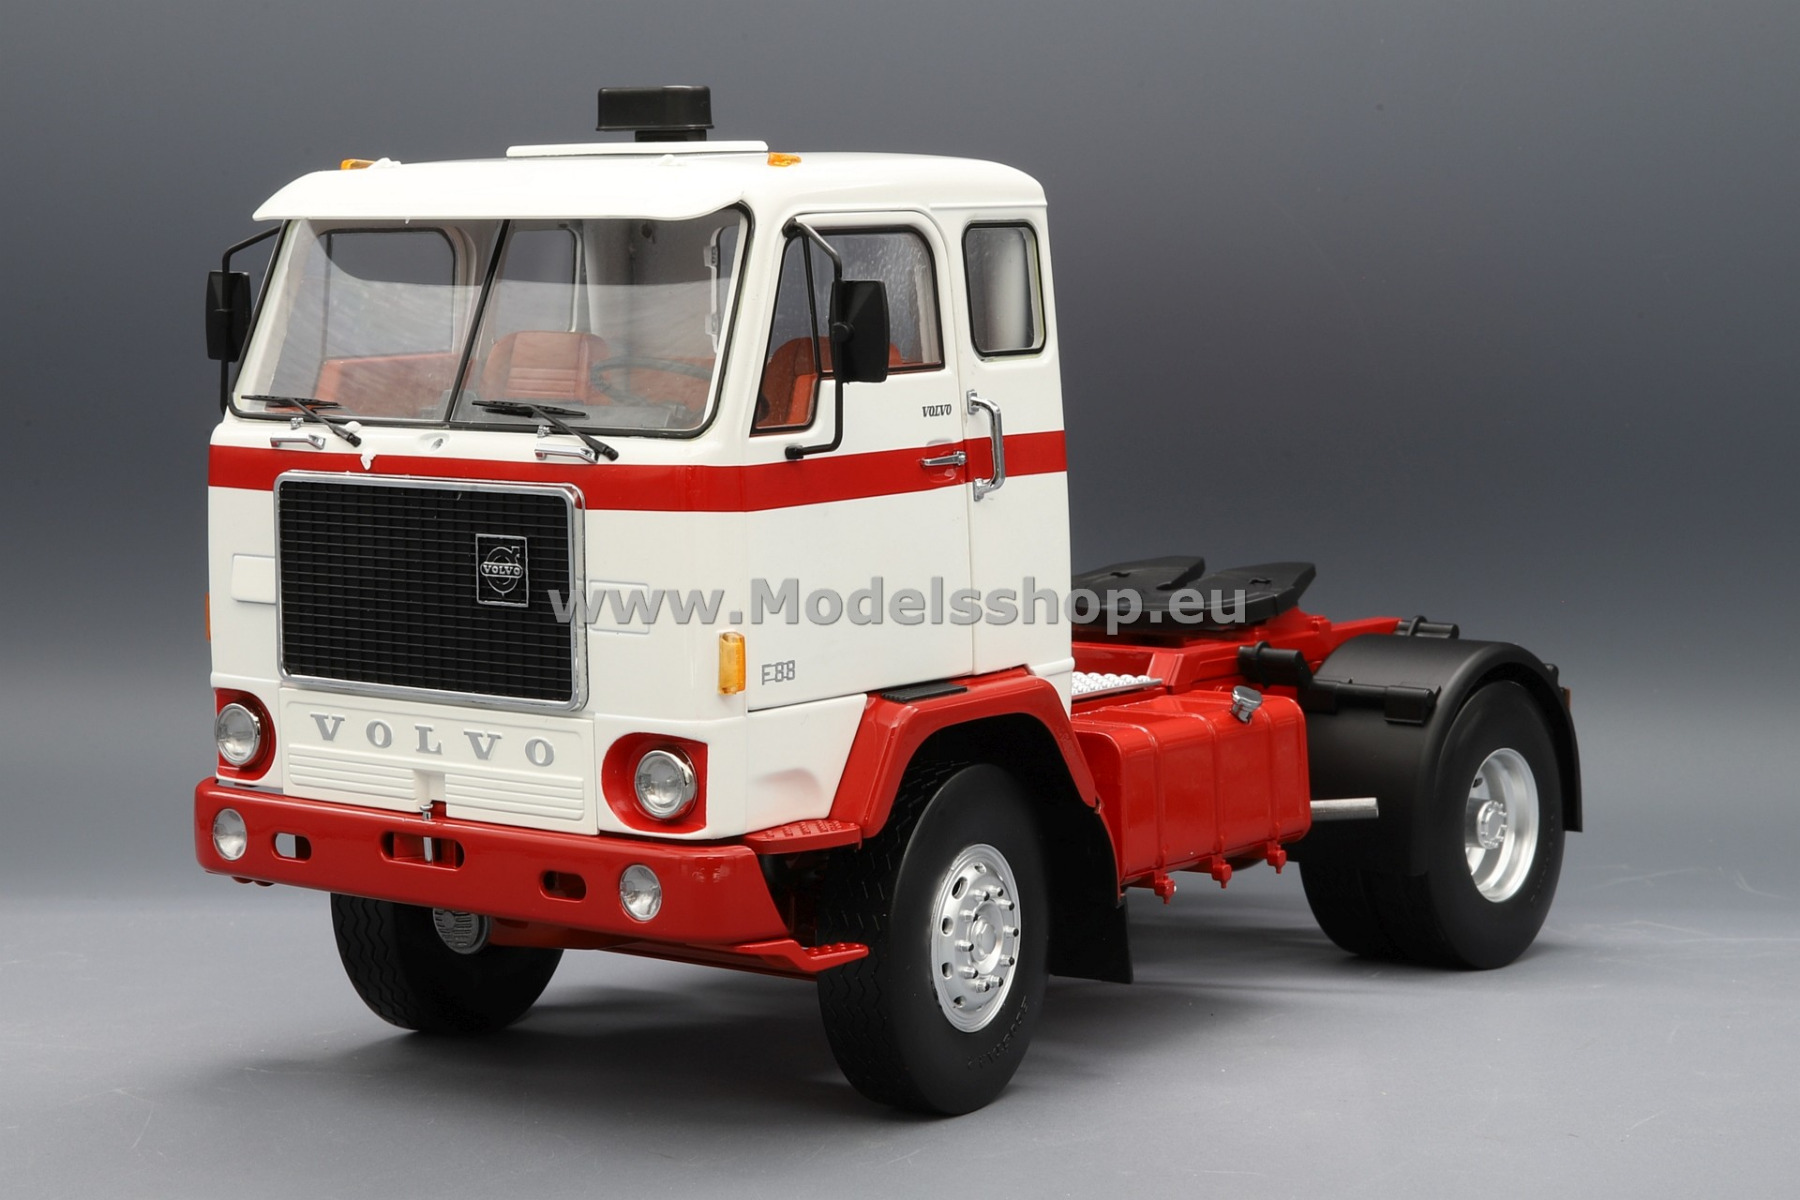 MCG 18141 Volvo F88 tractor truck, 1971 /white - red/